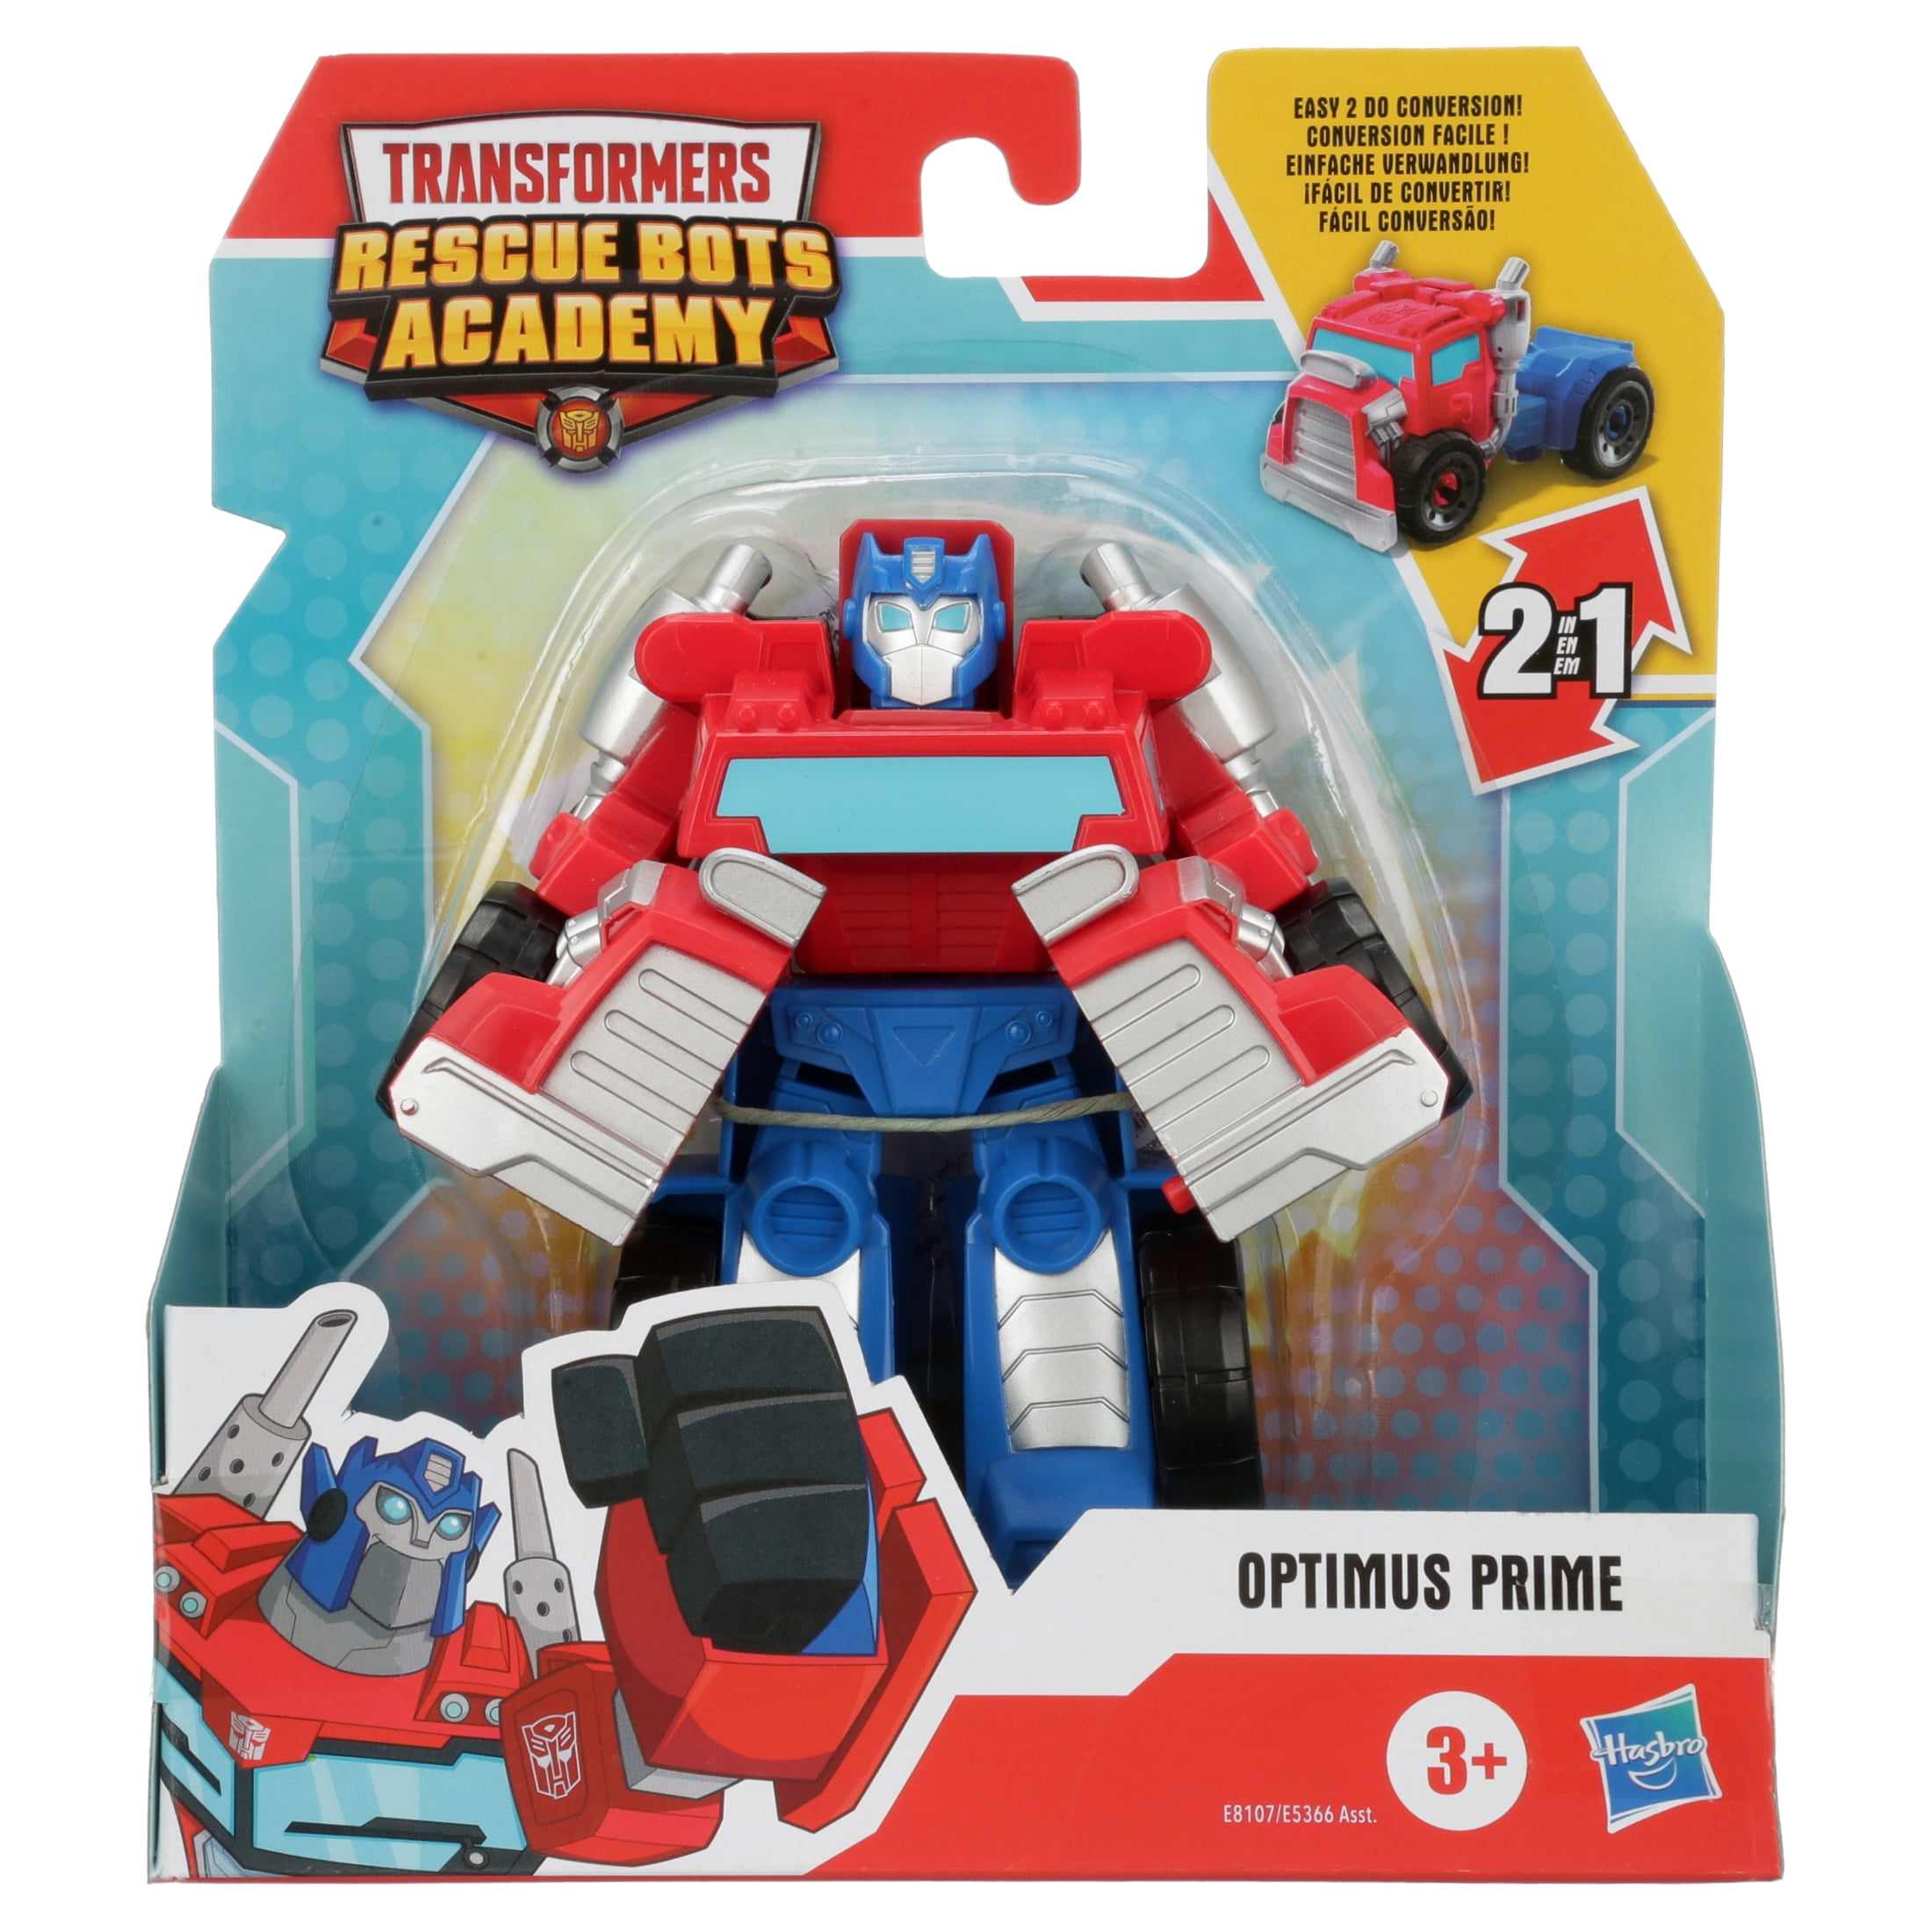 Transformers Playskool Héros Rescue Bots Boulder & Optimus Prime Figure New in package 